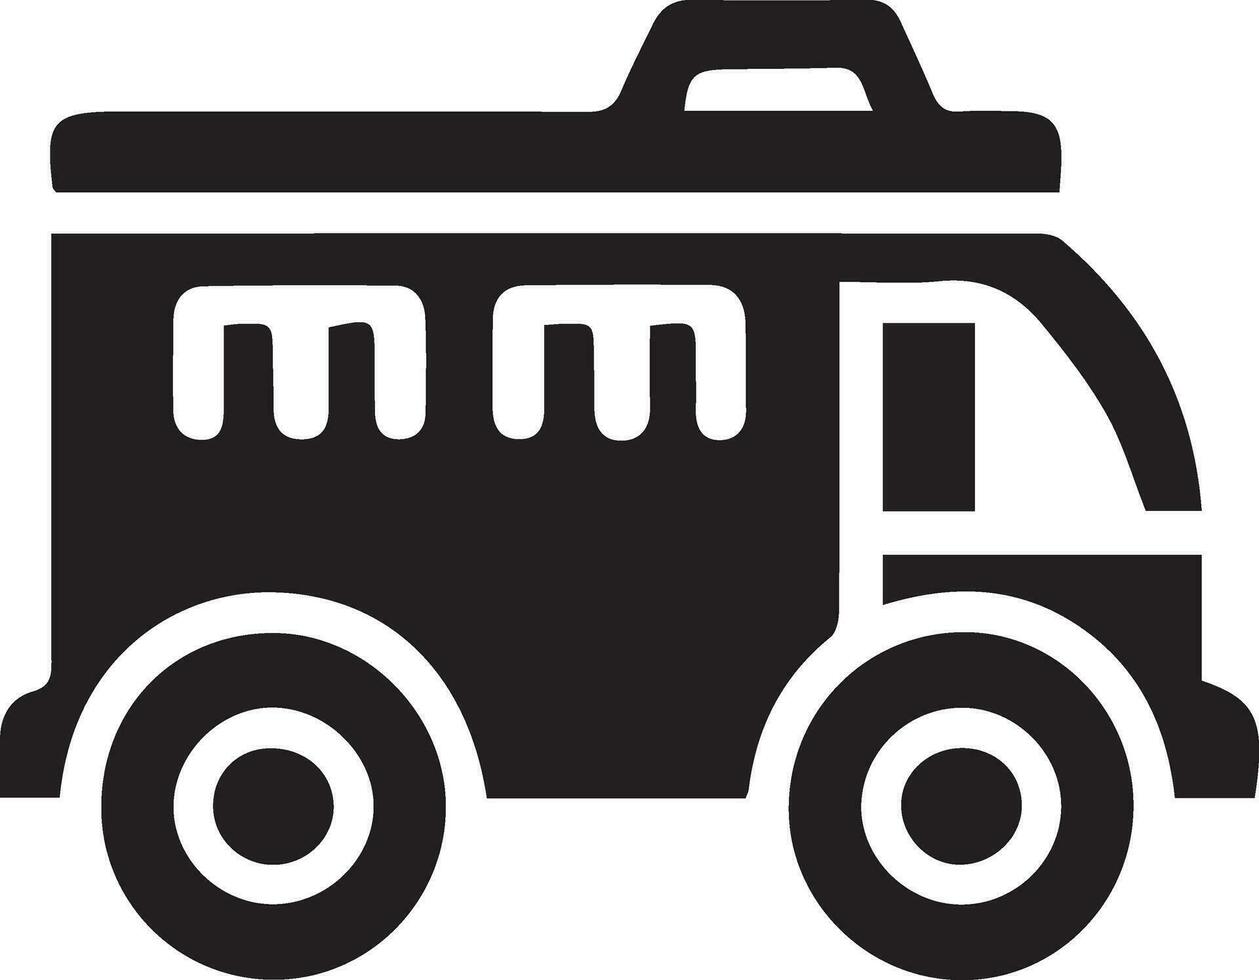 A Bus Icon vector silhouette black color 3